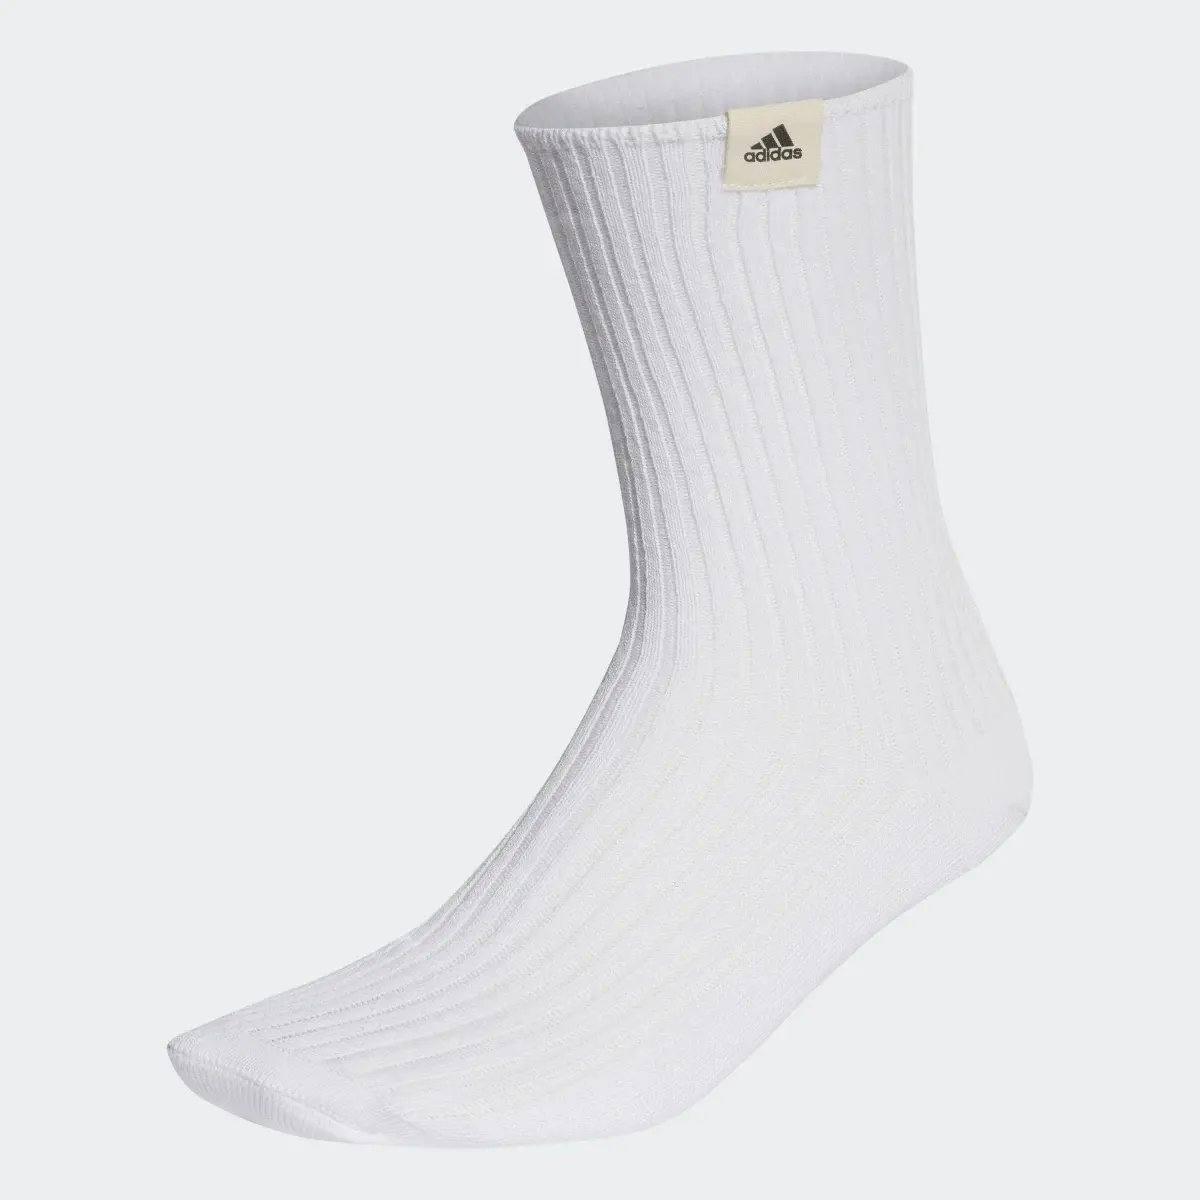 Adidas Best Label Socken, 1 Paar. 2